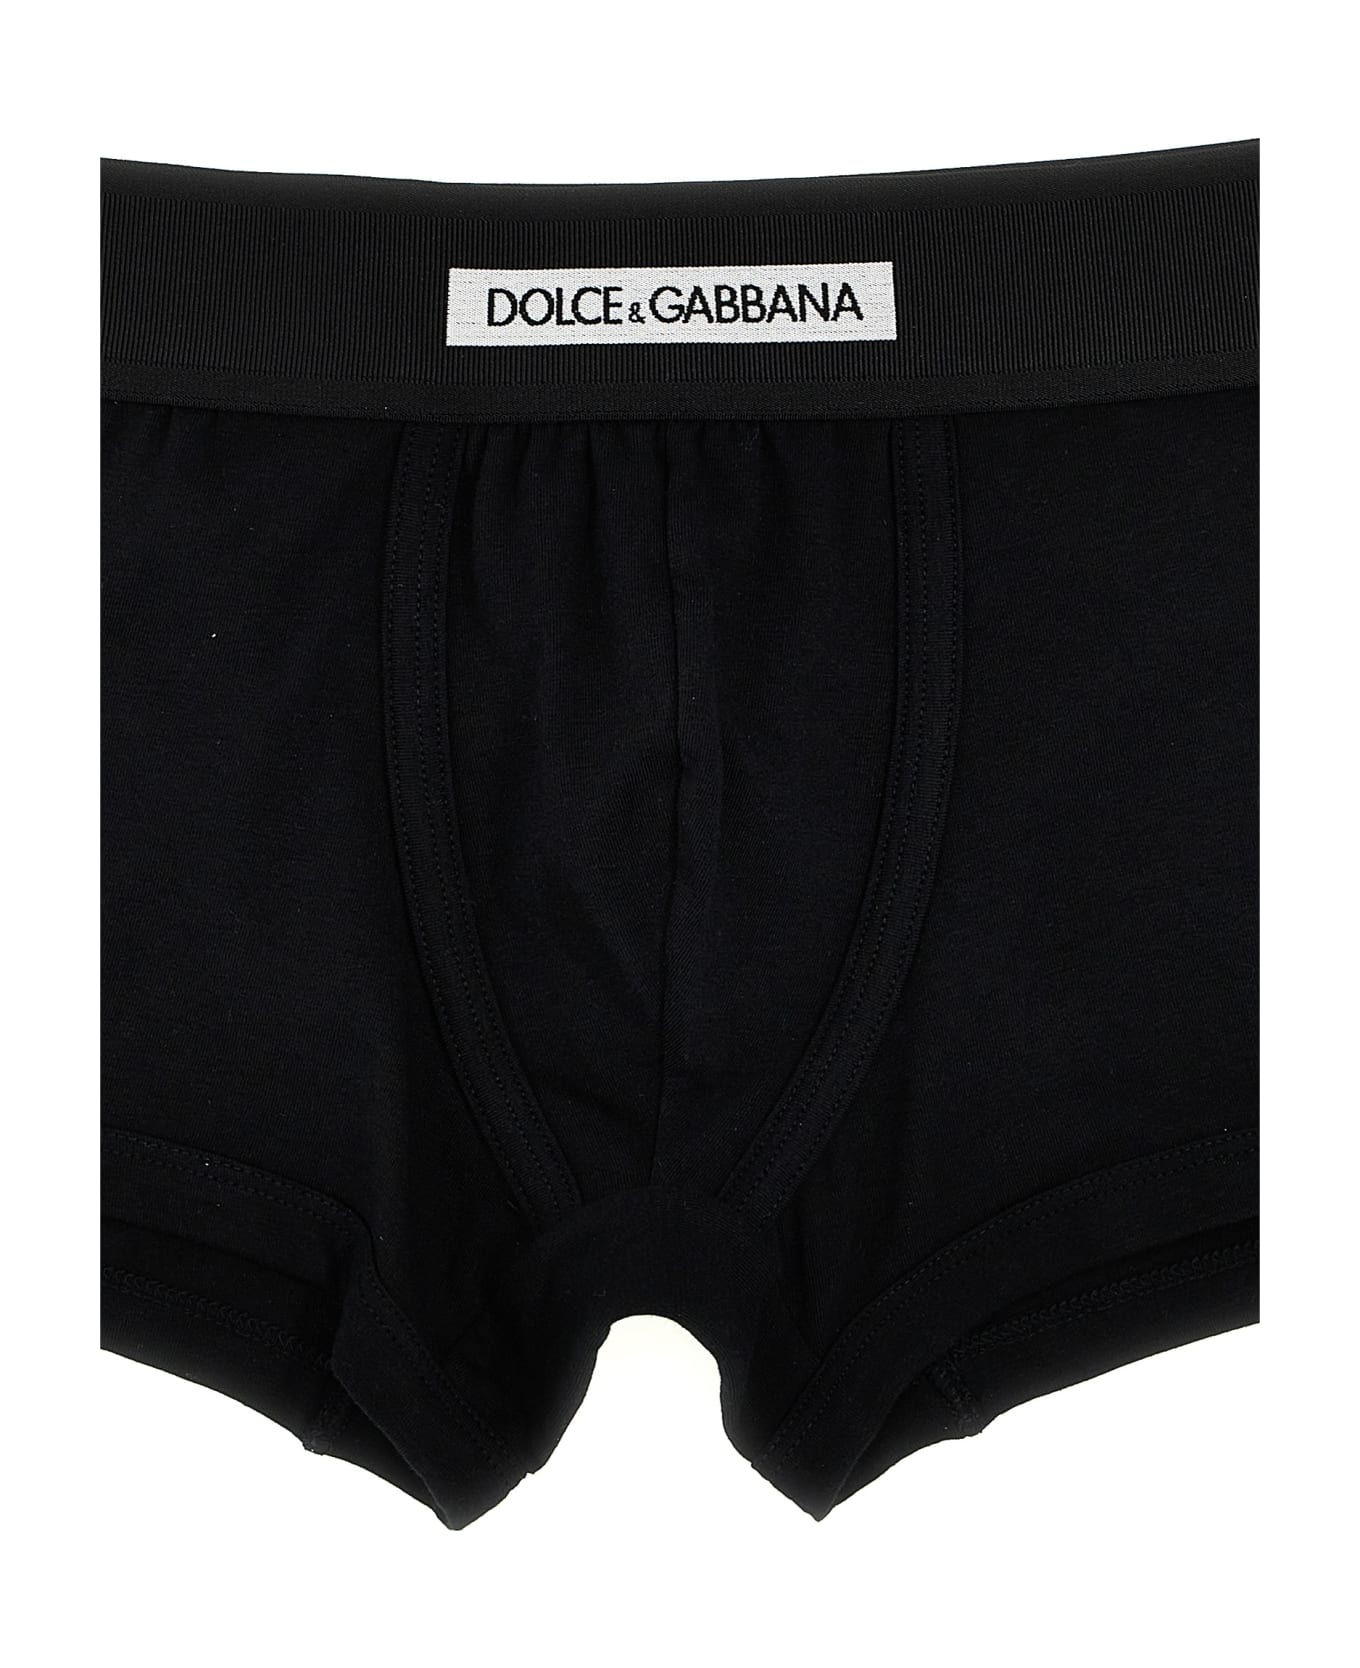 Dolce & Gabbana Boxers - Black